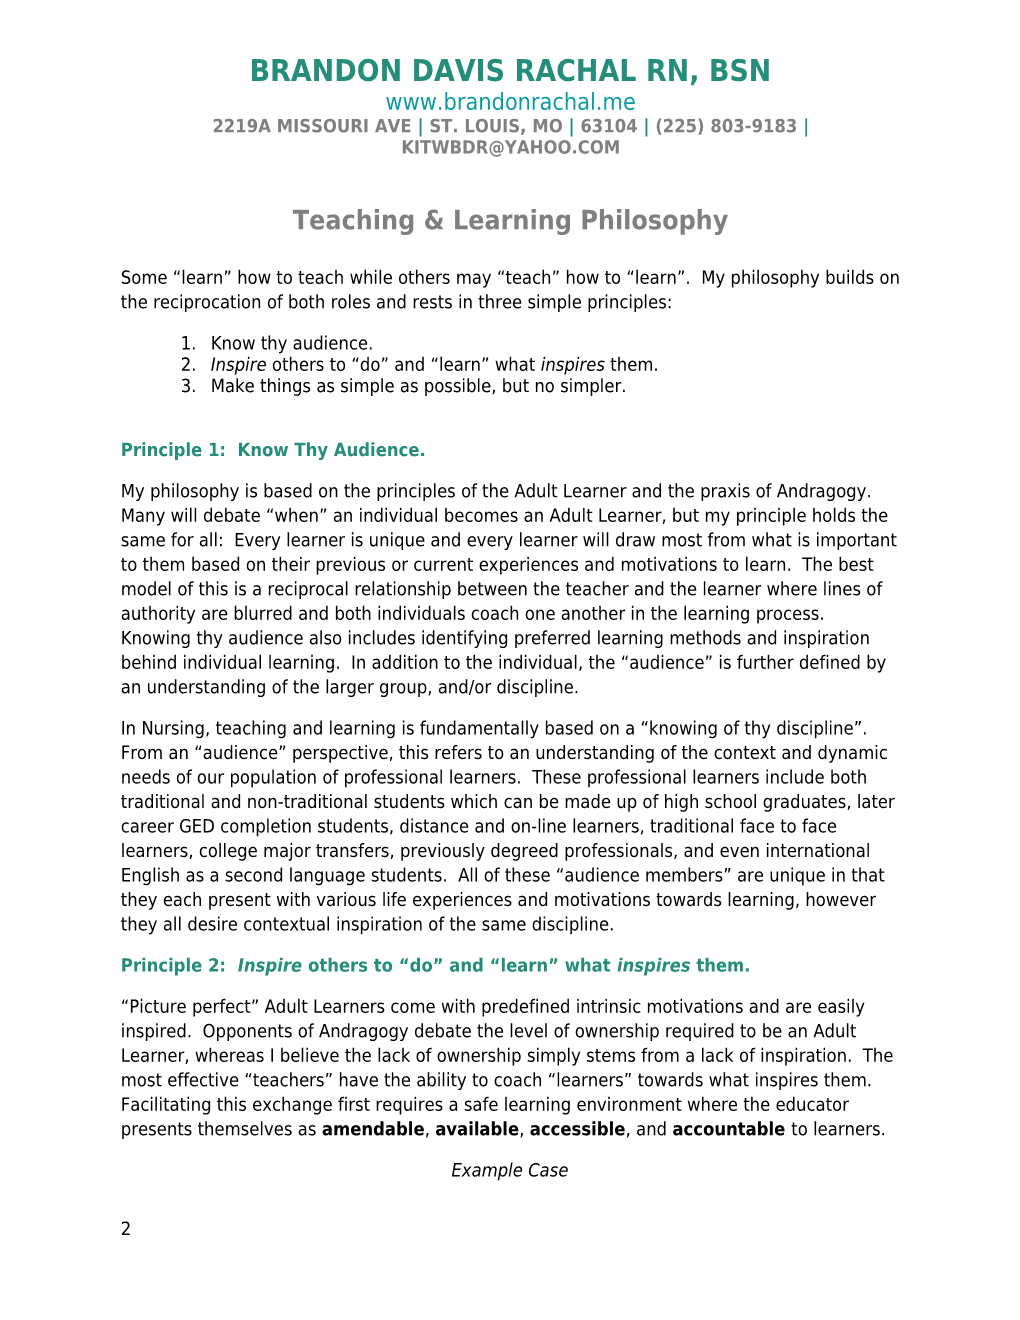 Teaching & Learning Philosophy